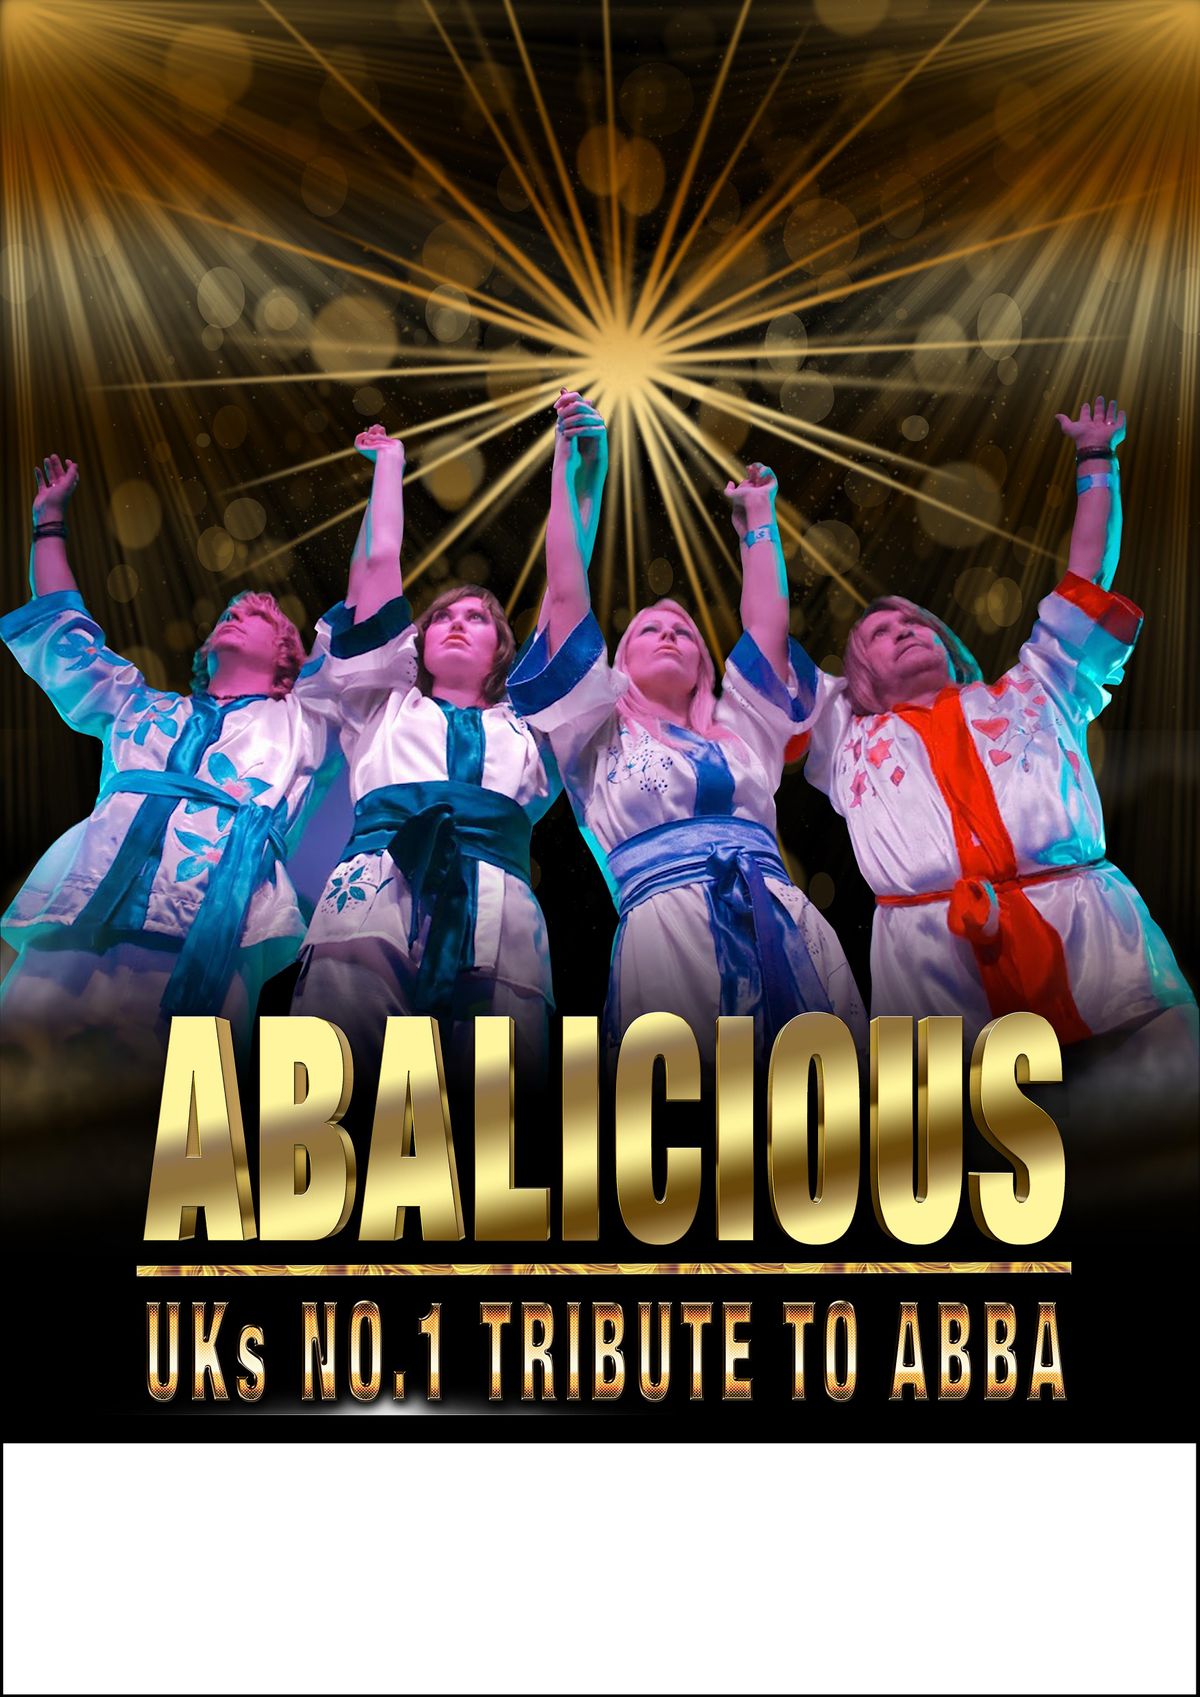 ABALICIOUS - ABBA Tribute Night